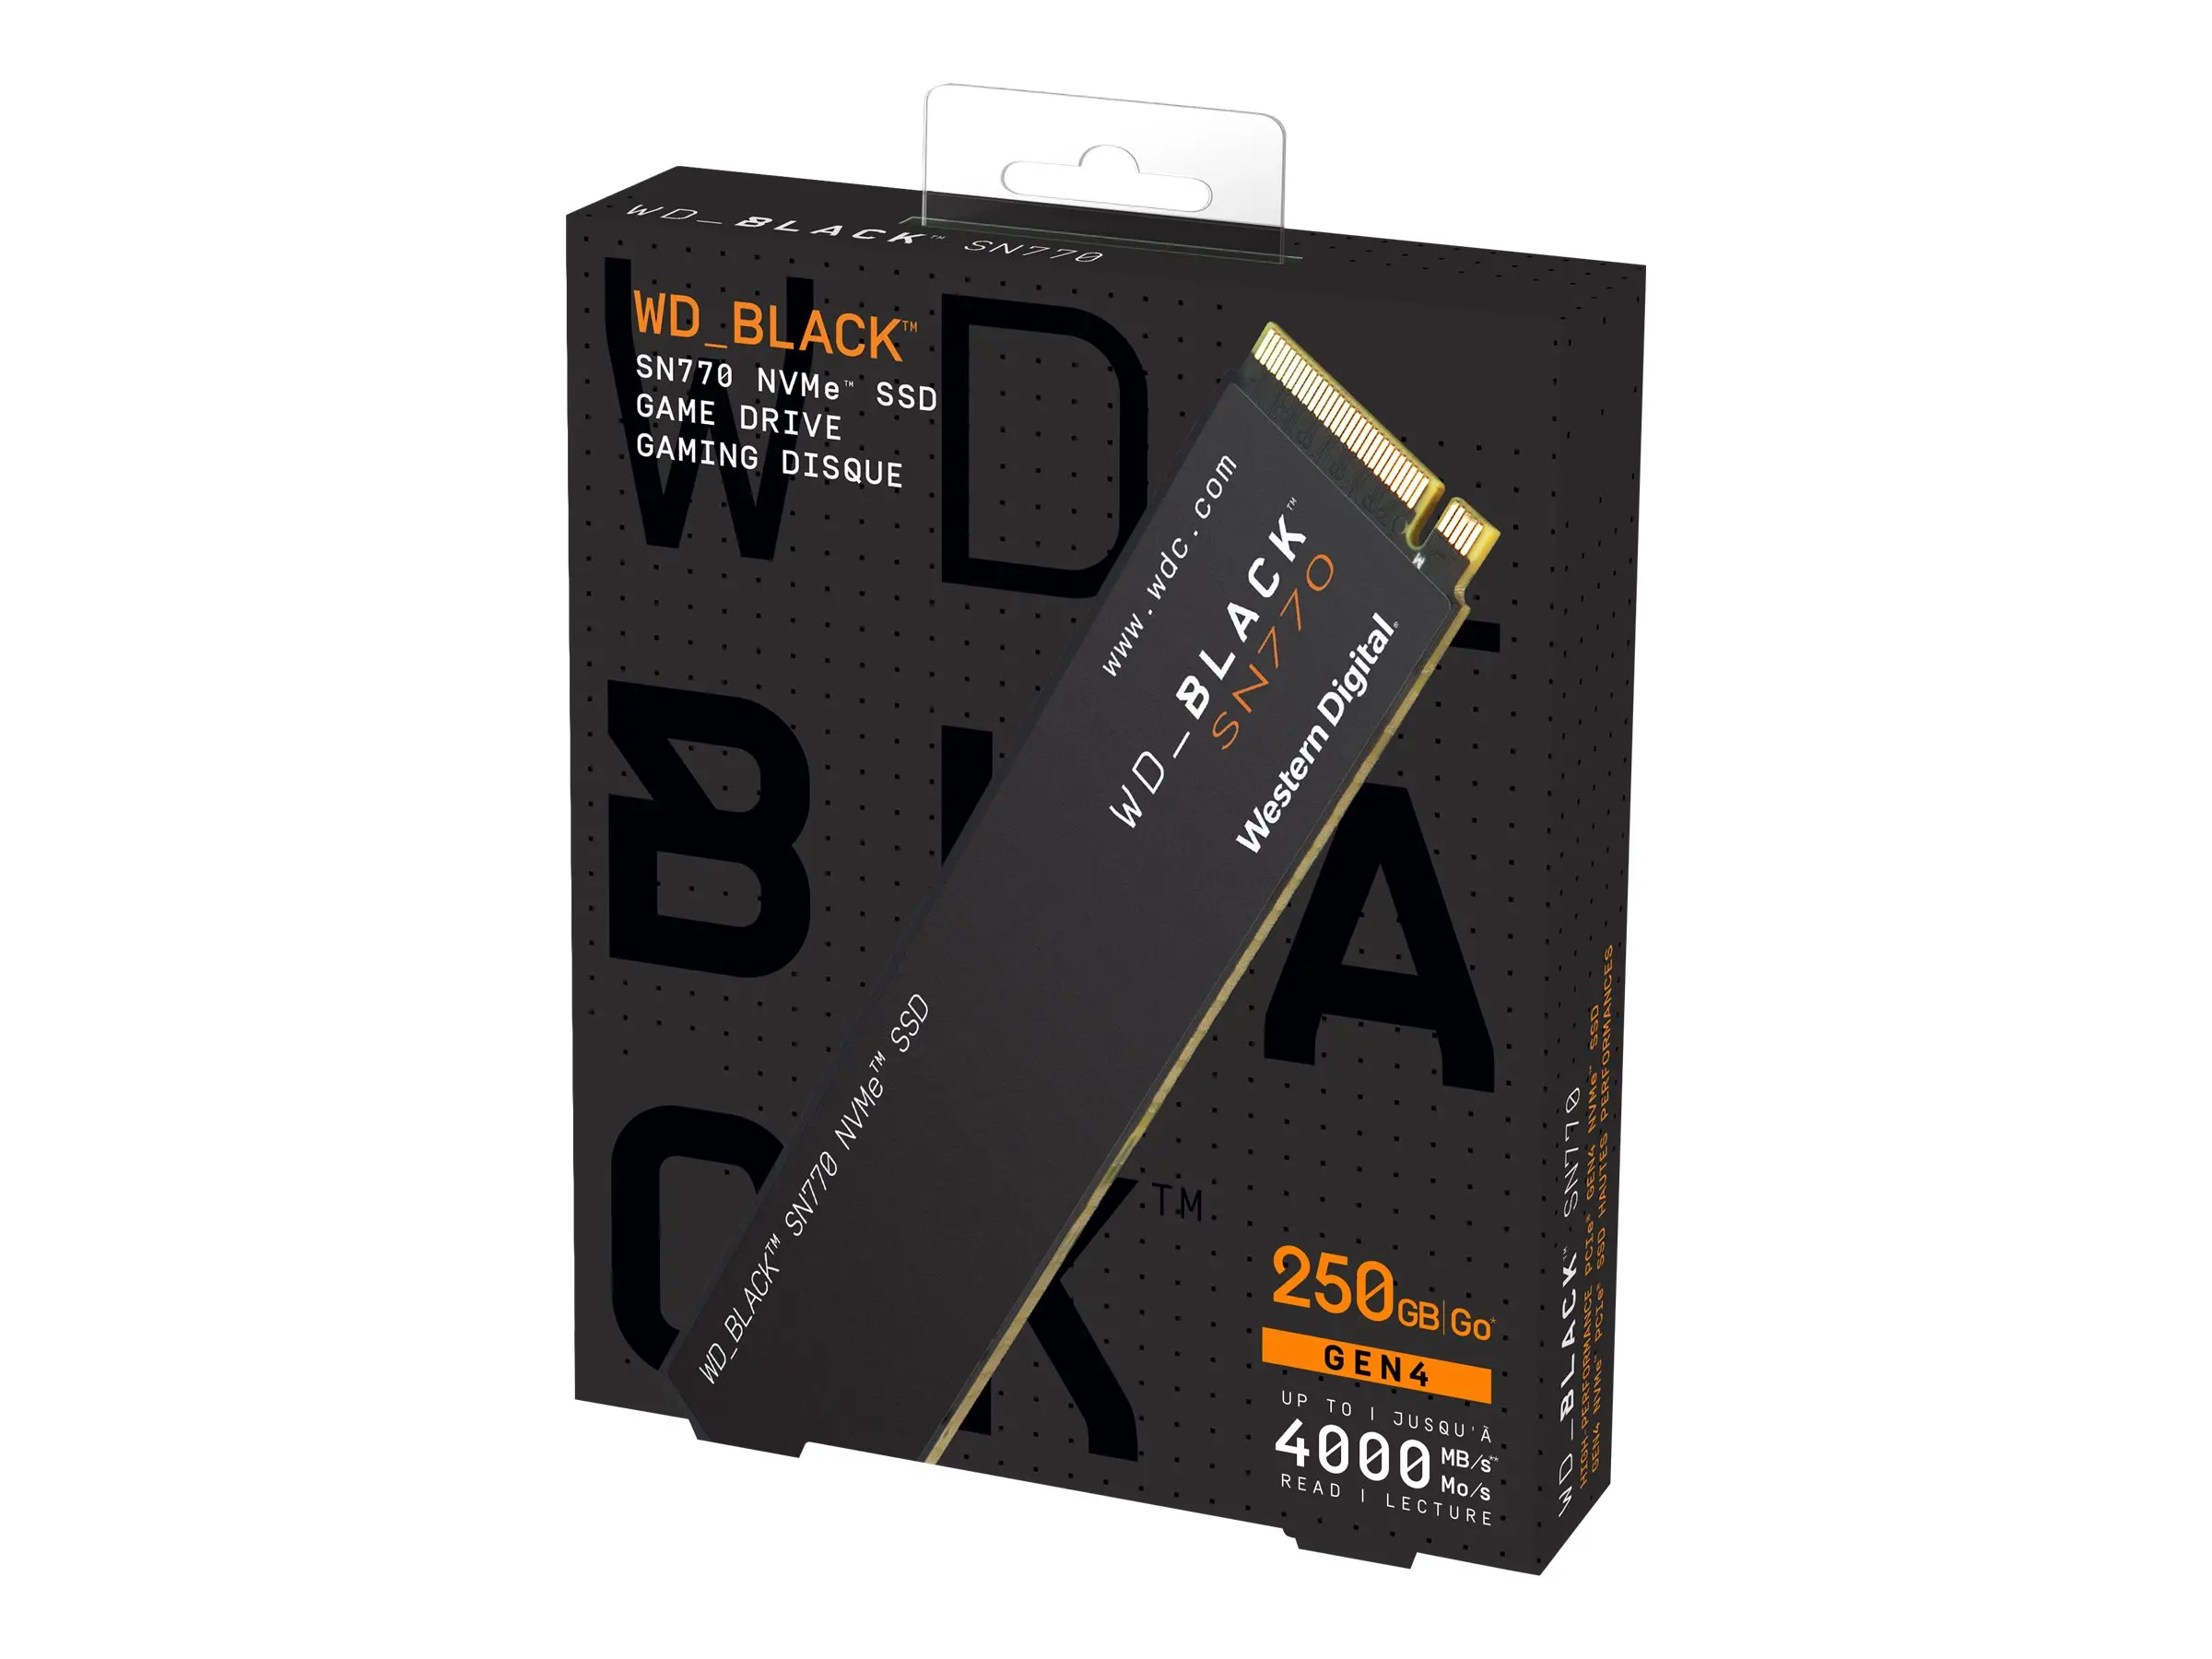 WD Black SSD SN770 NVMe 250GB PCIe Gen4 16GT/s M.2 2280 - image 1